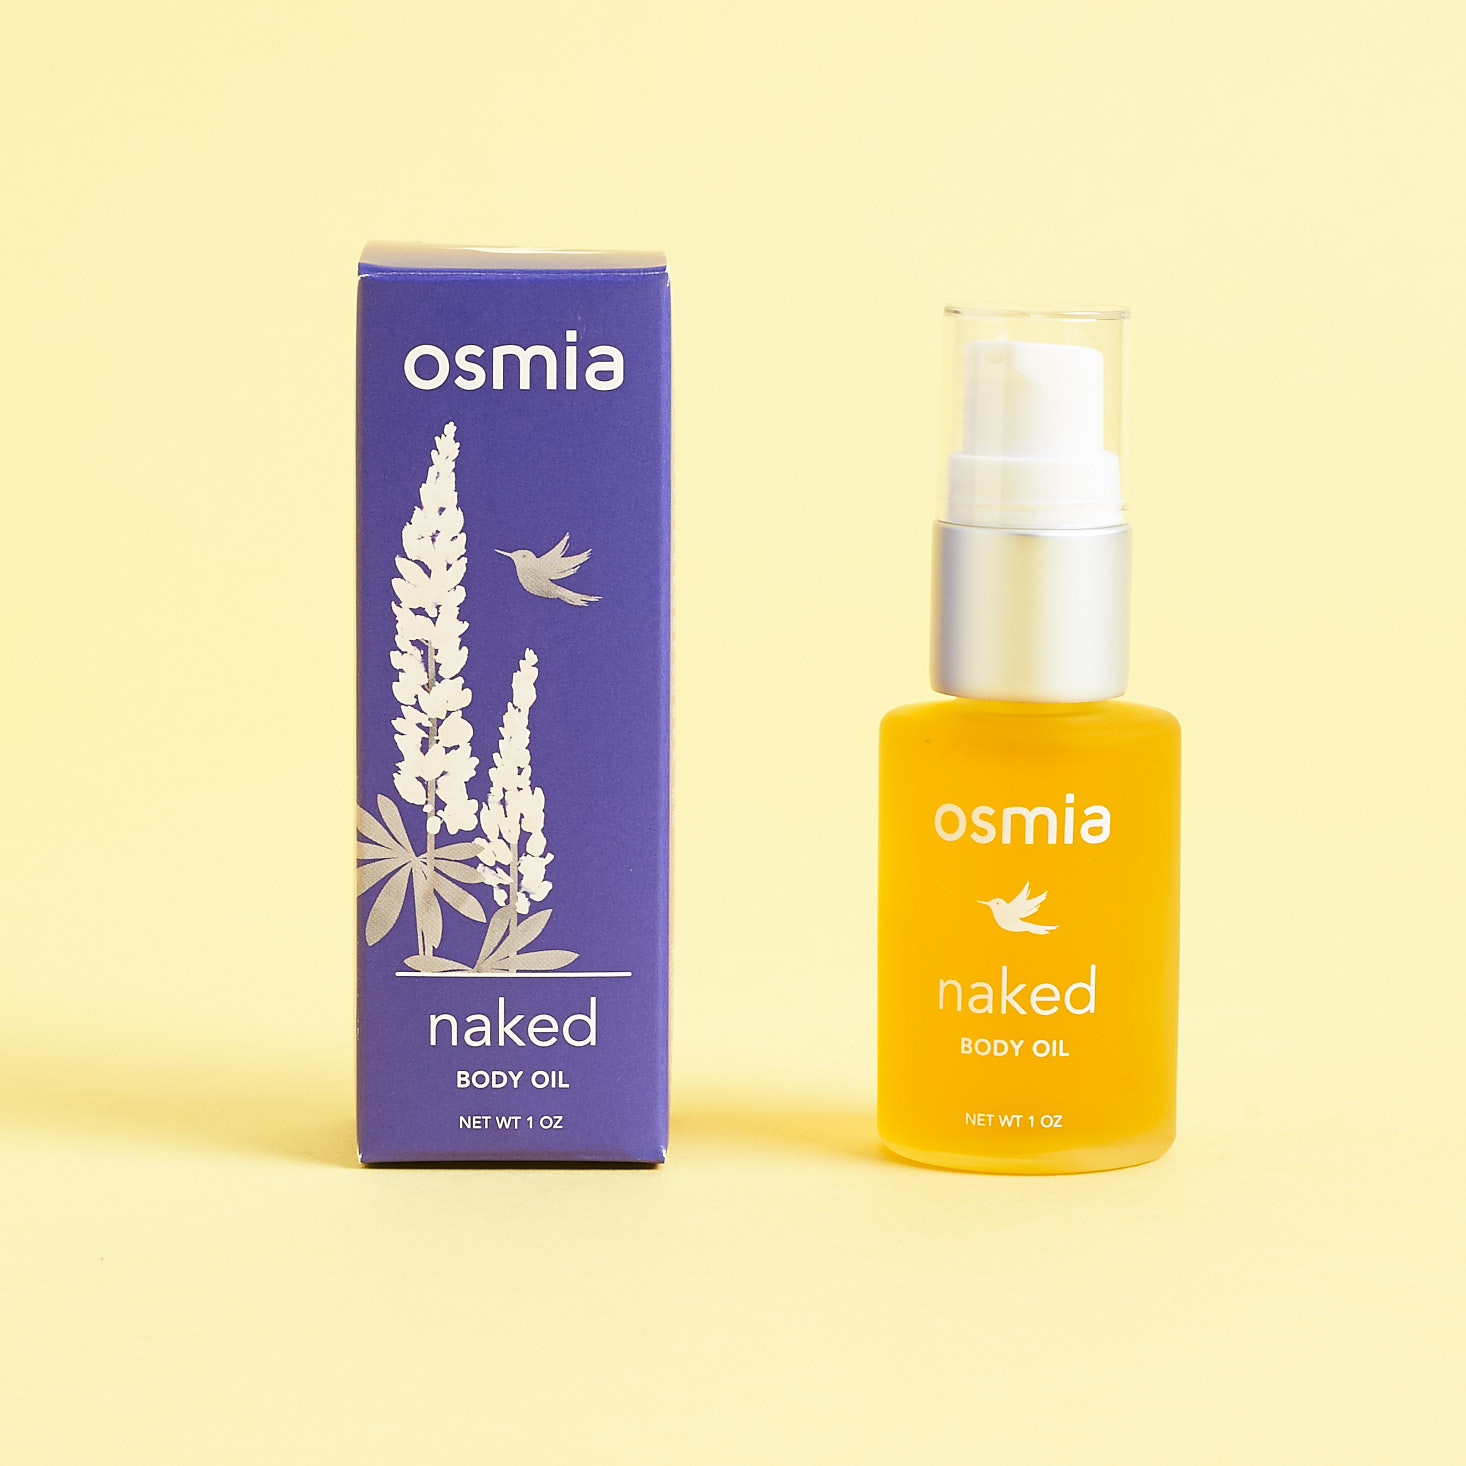 Osmia Organics Naked Body Oil with box